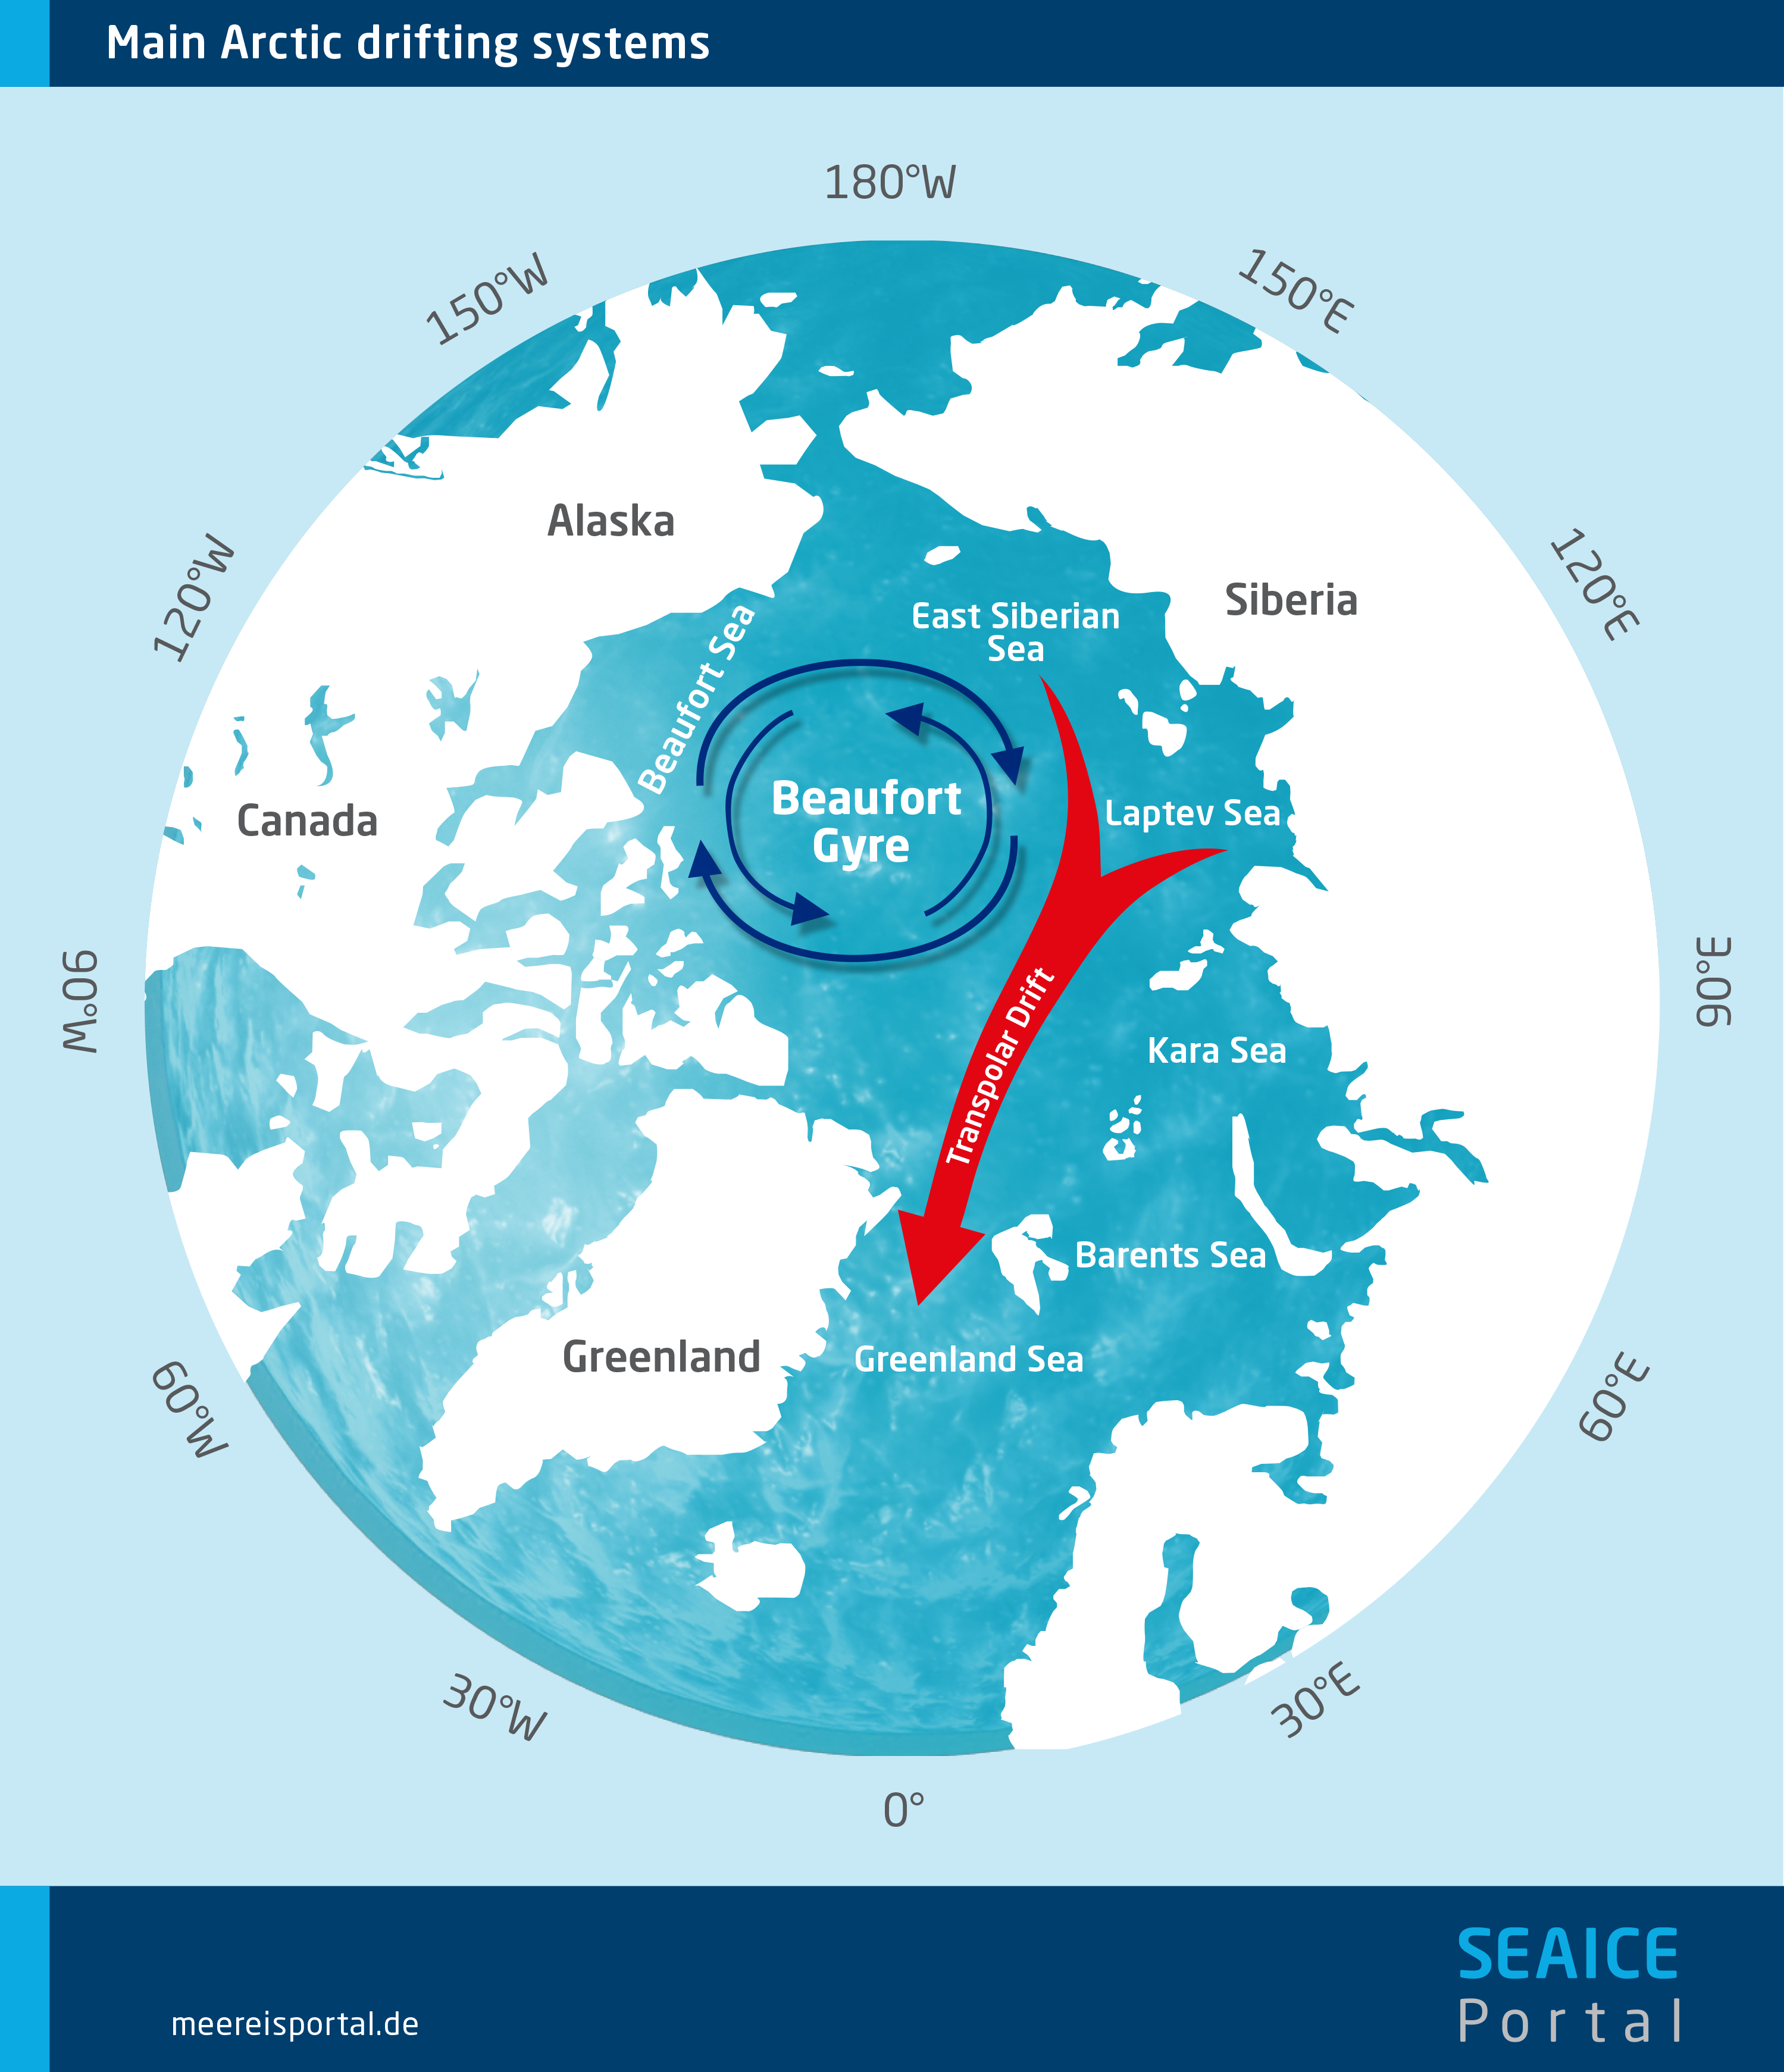 Main Arctic drifting systems.